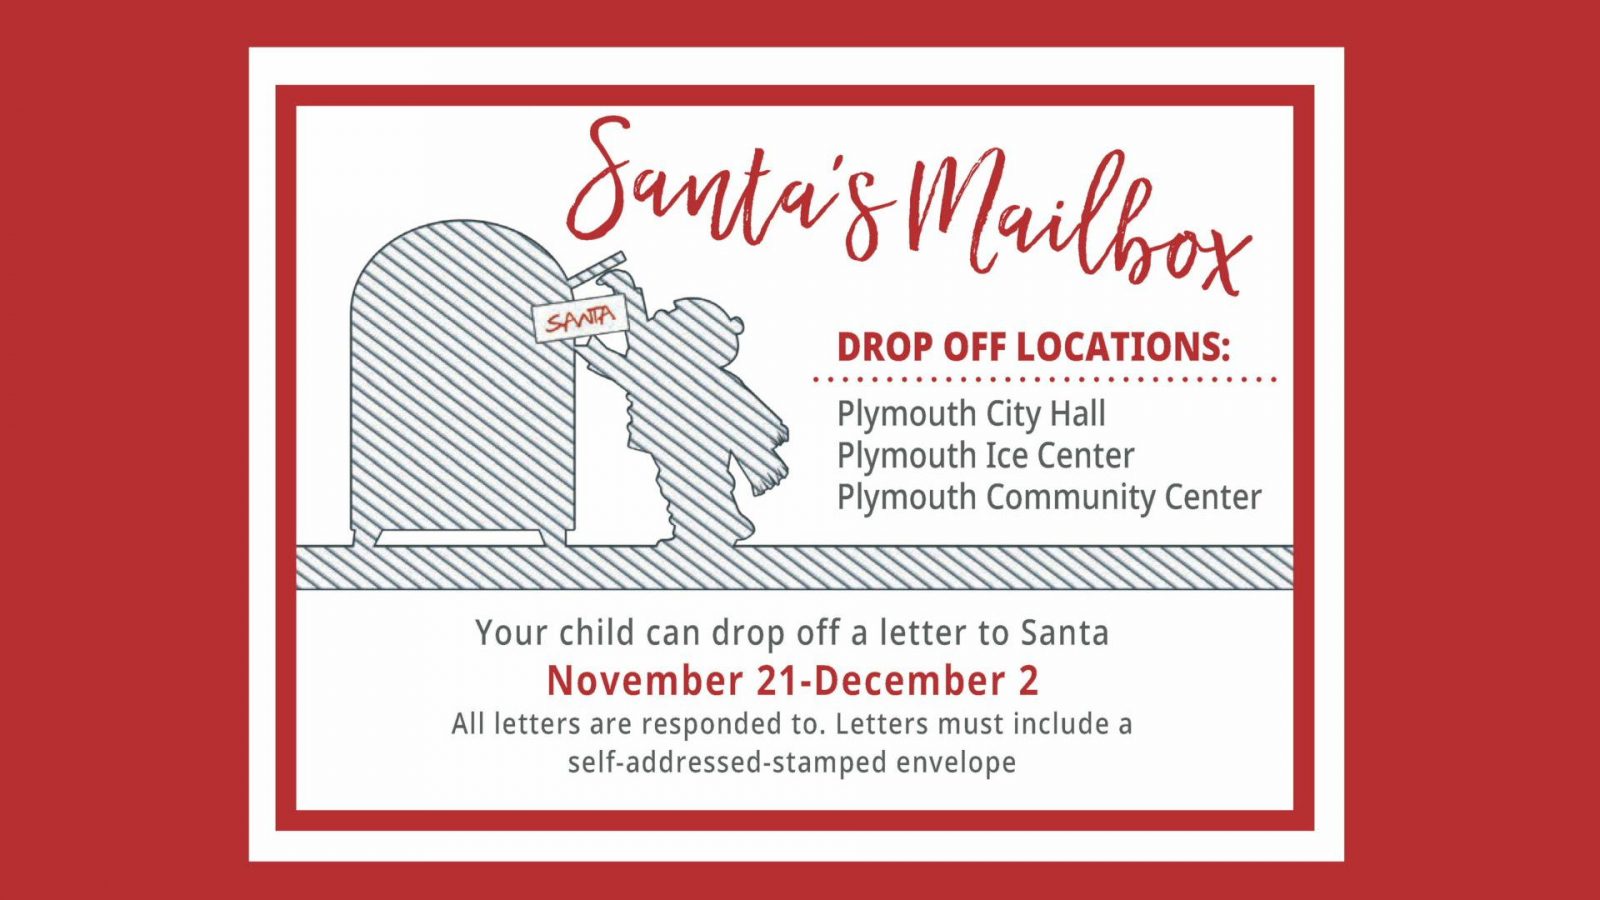 Santa's Mailbox in Plymouth